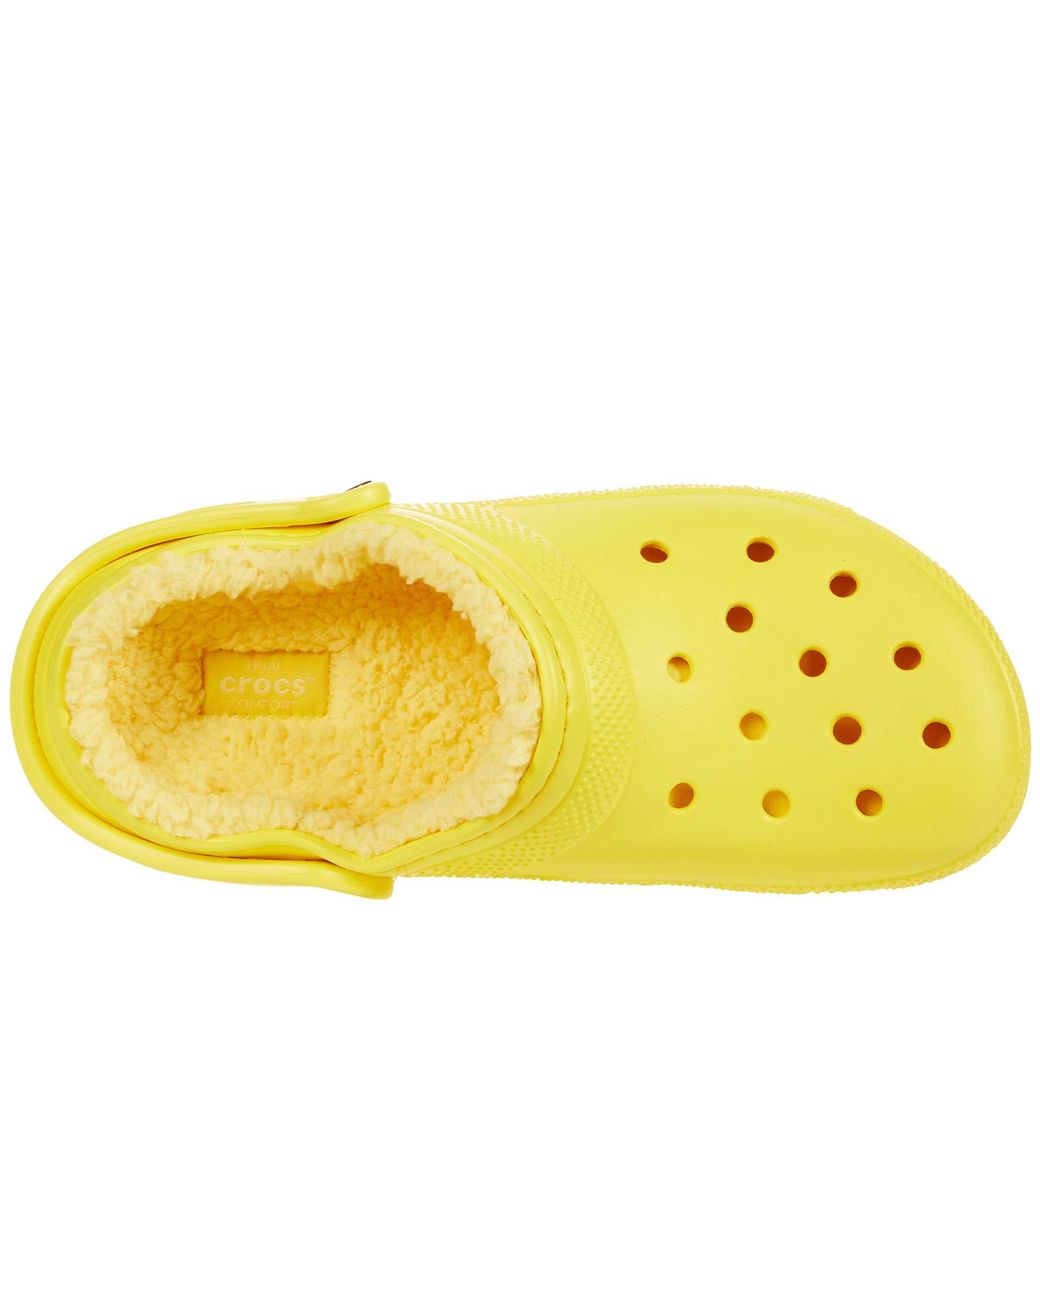 classic lined crocs yellow